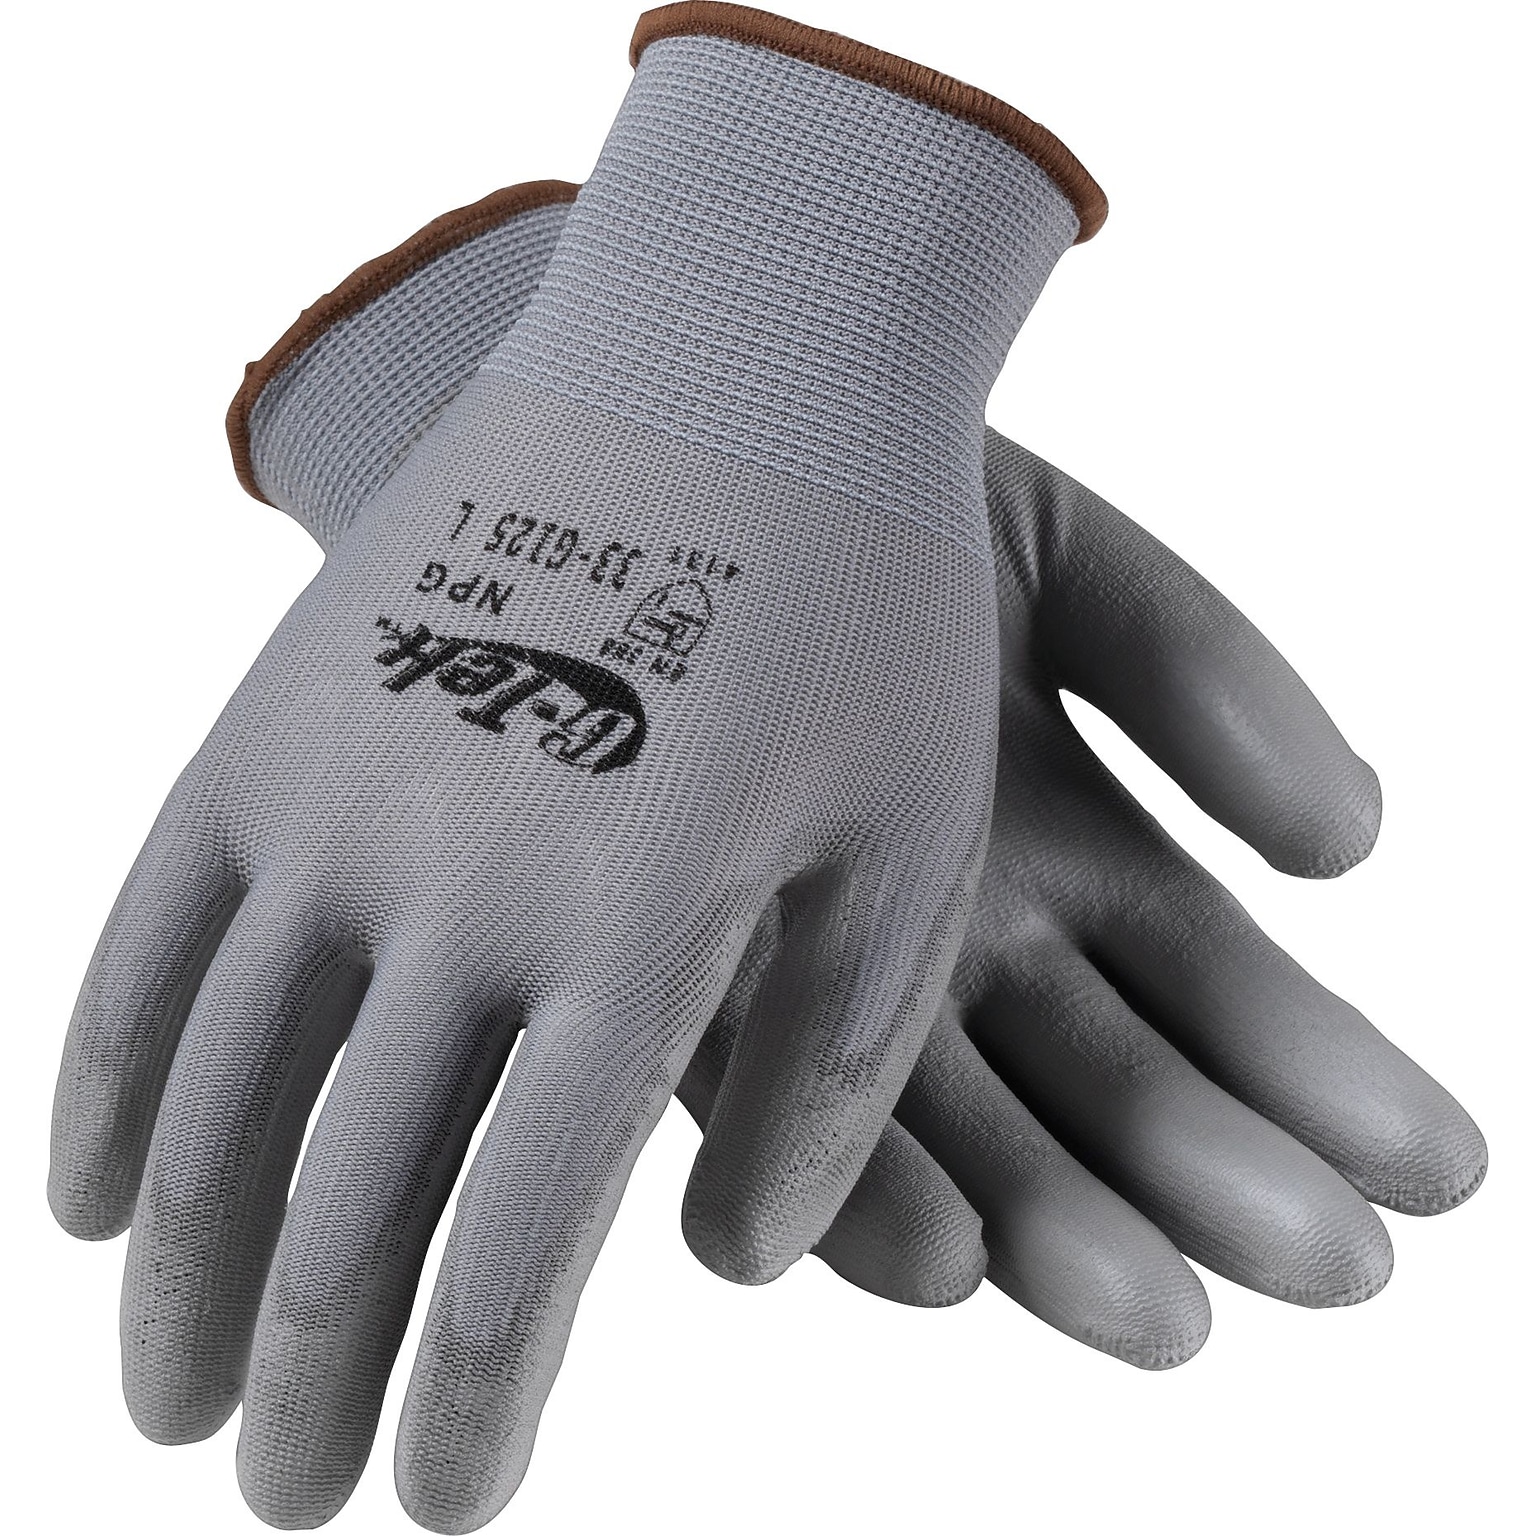 G-Tek 33-G125 Latex Coated Polyurethane Gloves, XL, 13 Gauge, Gray, 12 Pairs (33-G125/XL)